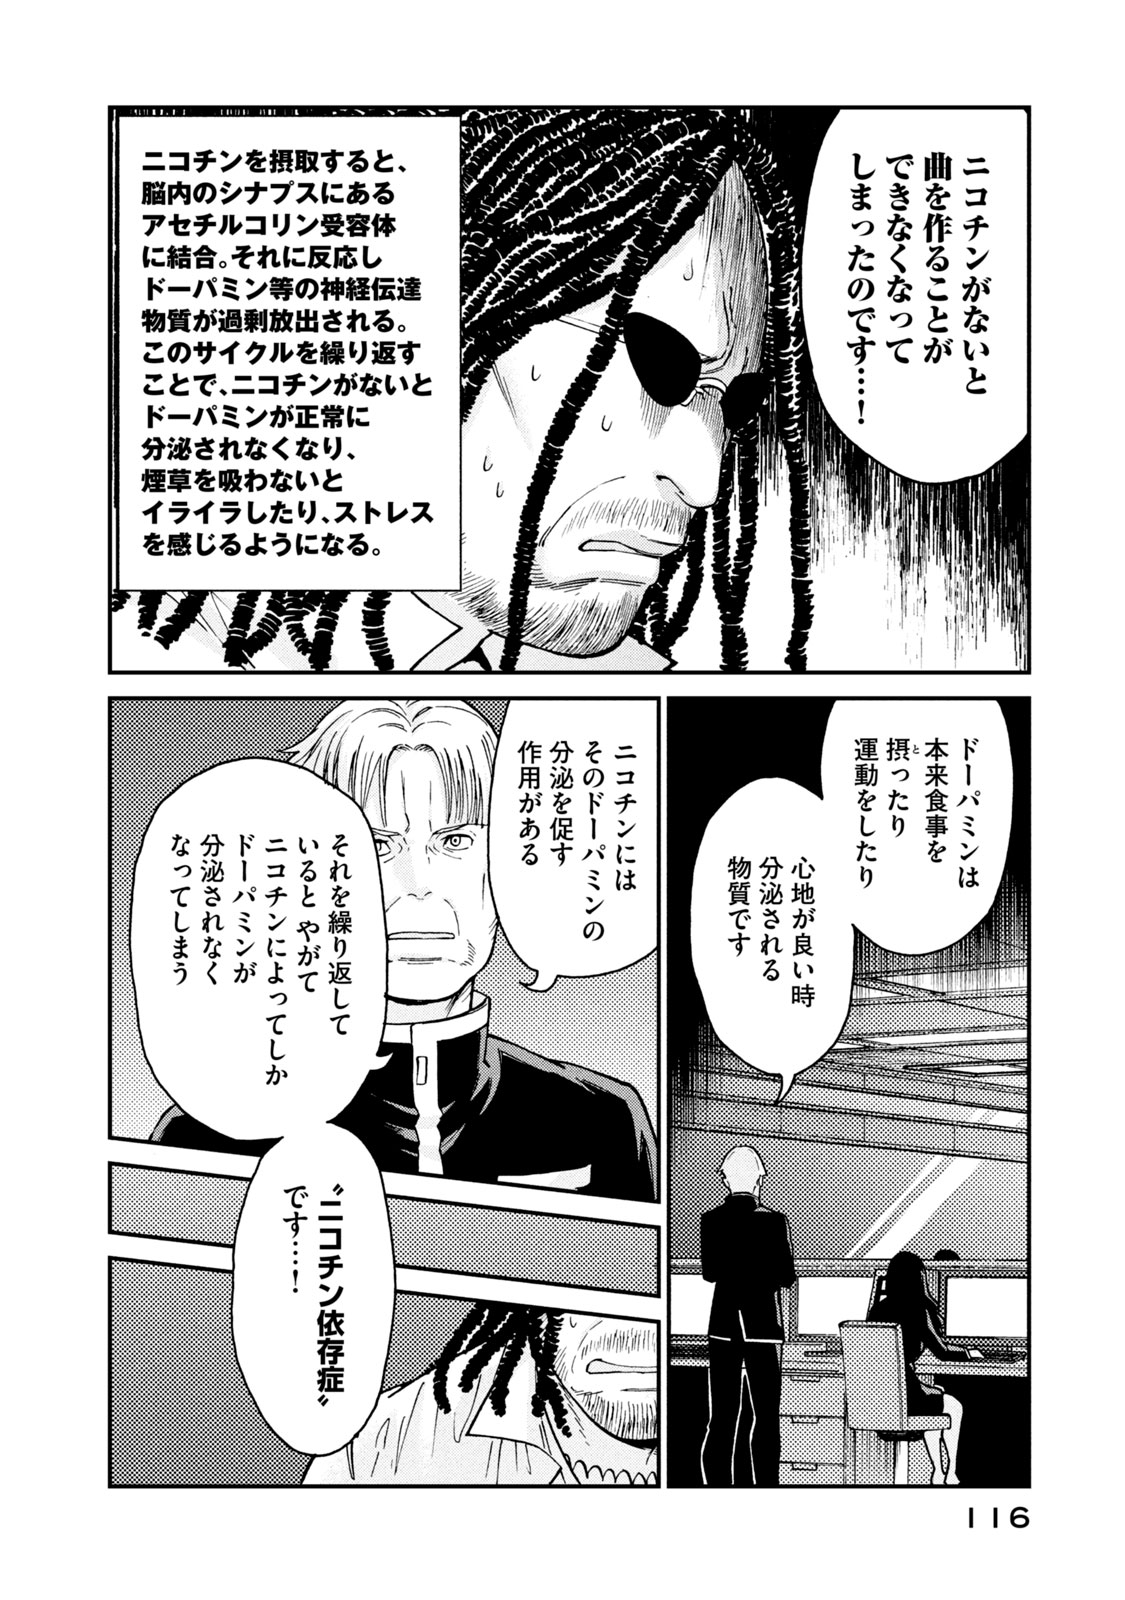 Hataraku Saibou BLACK - Chapter 35 - Page 24